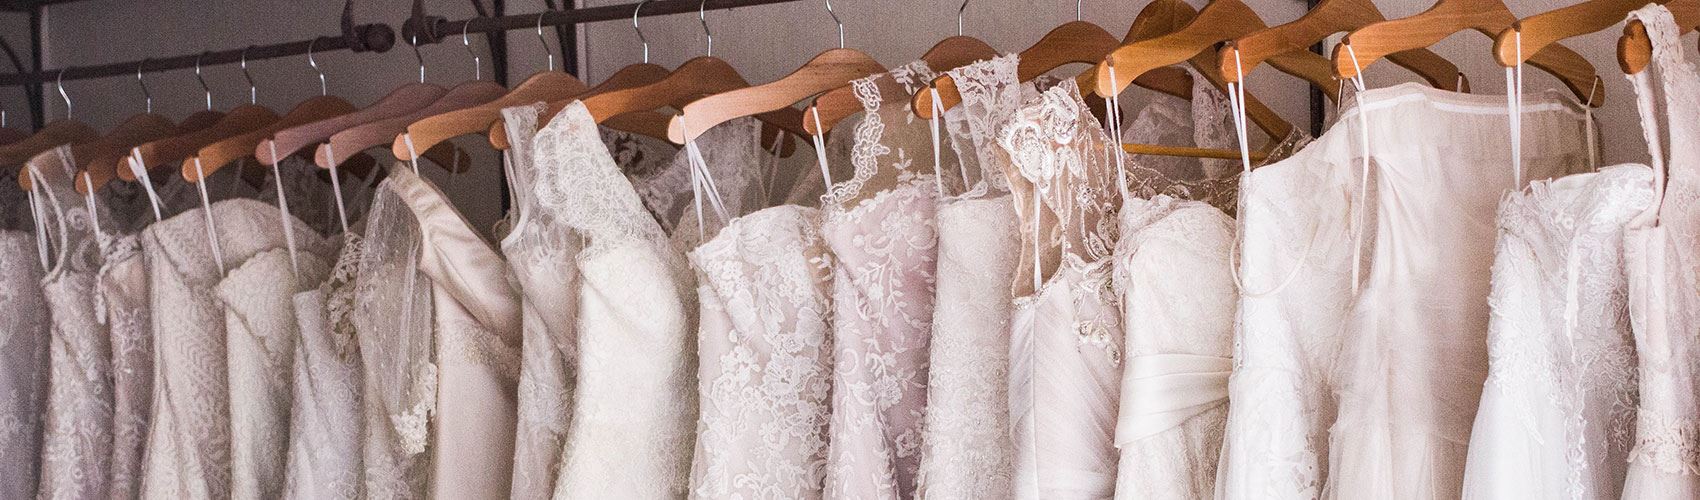 Pink tinted wedding dresses on rack. Desktop Image.